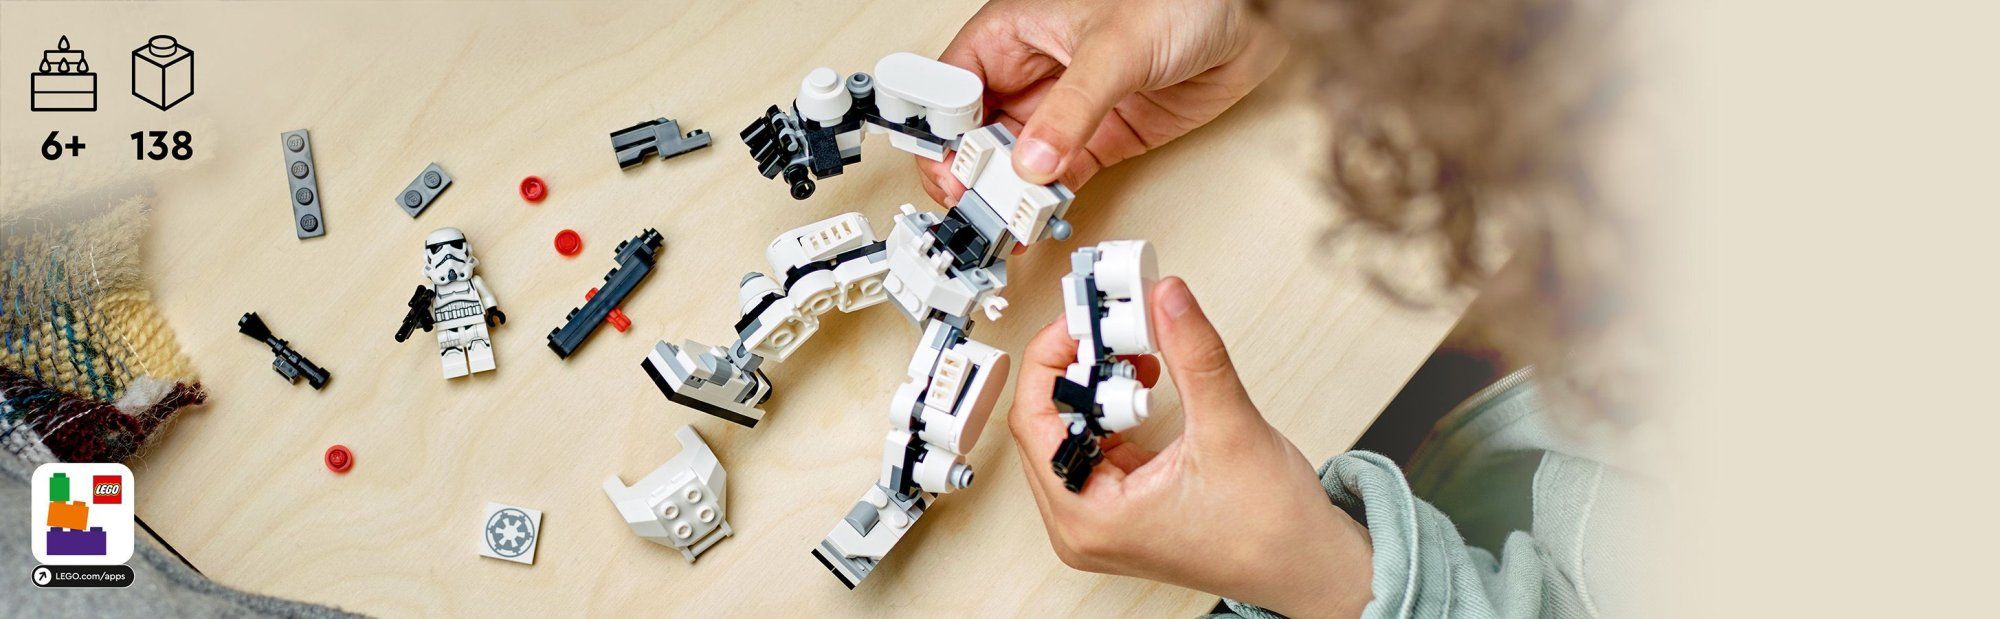 LEGO Star Wars 75370 Robotický oblek stormtroopera